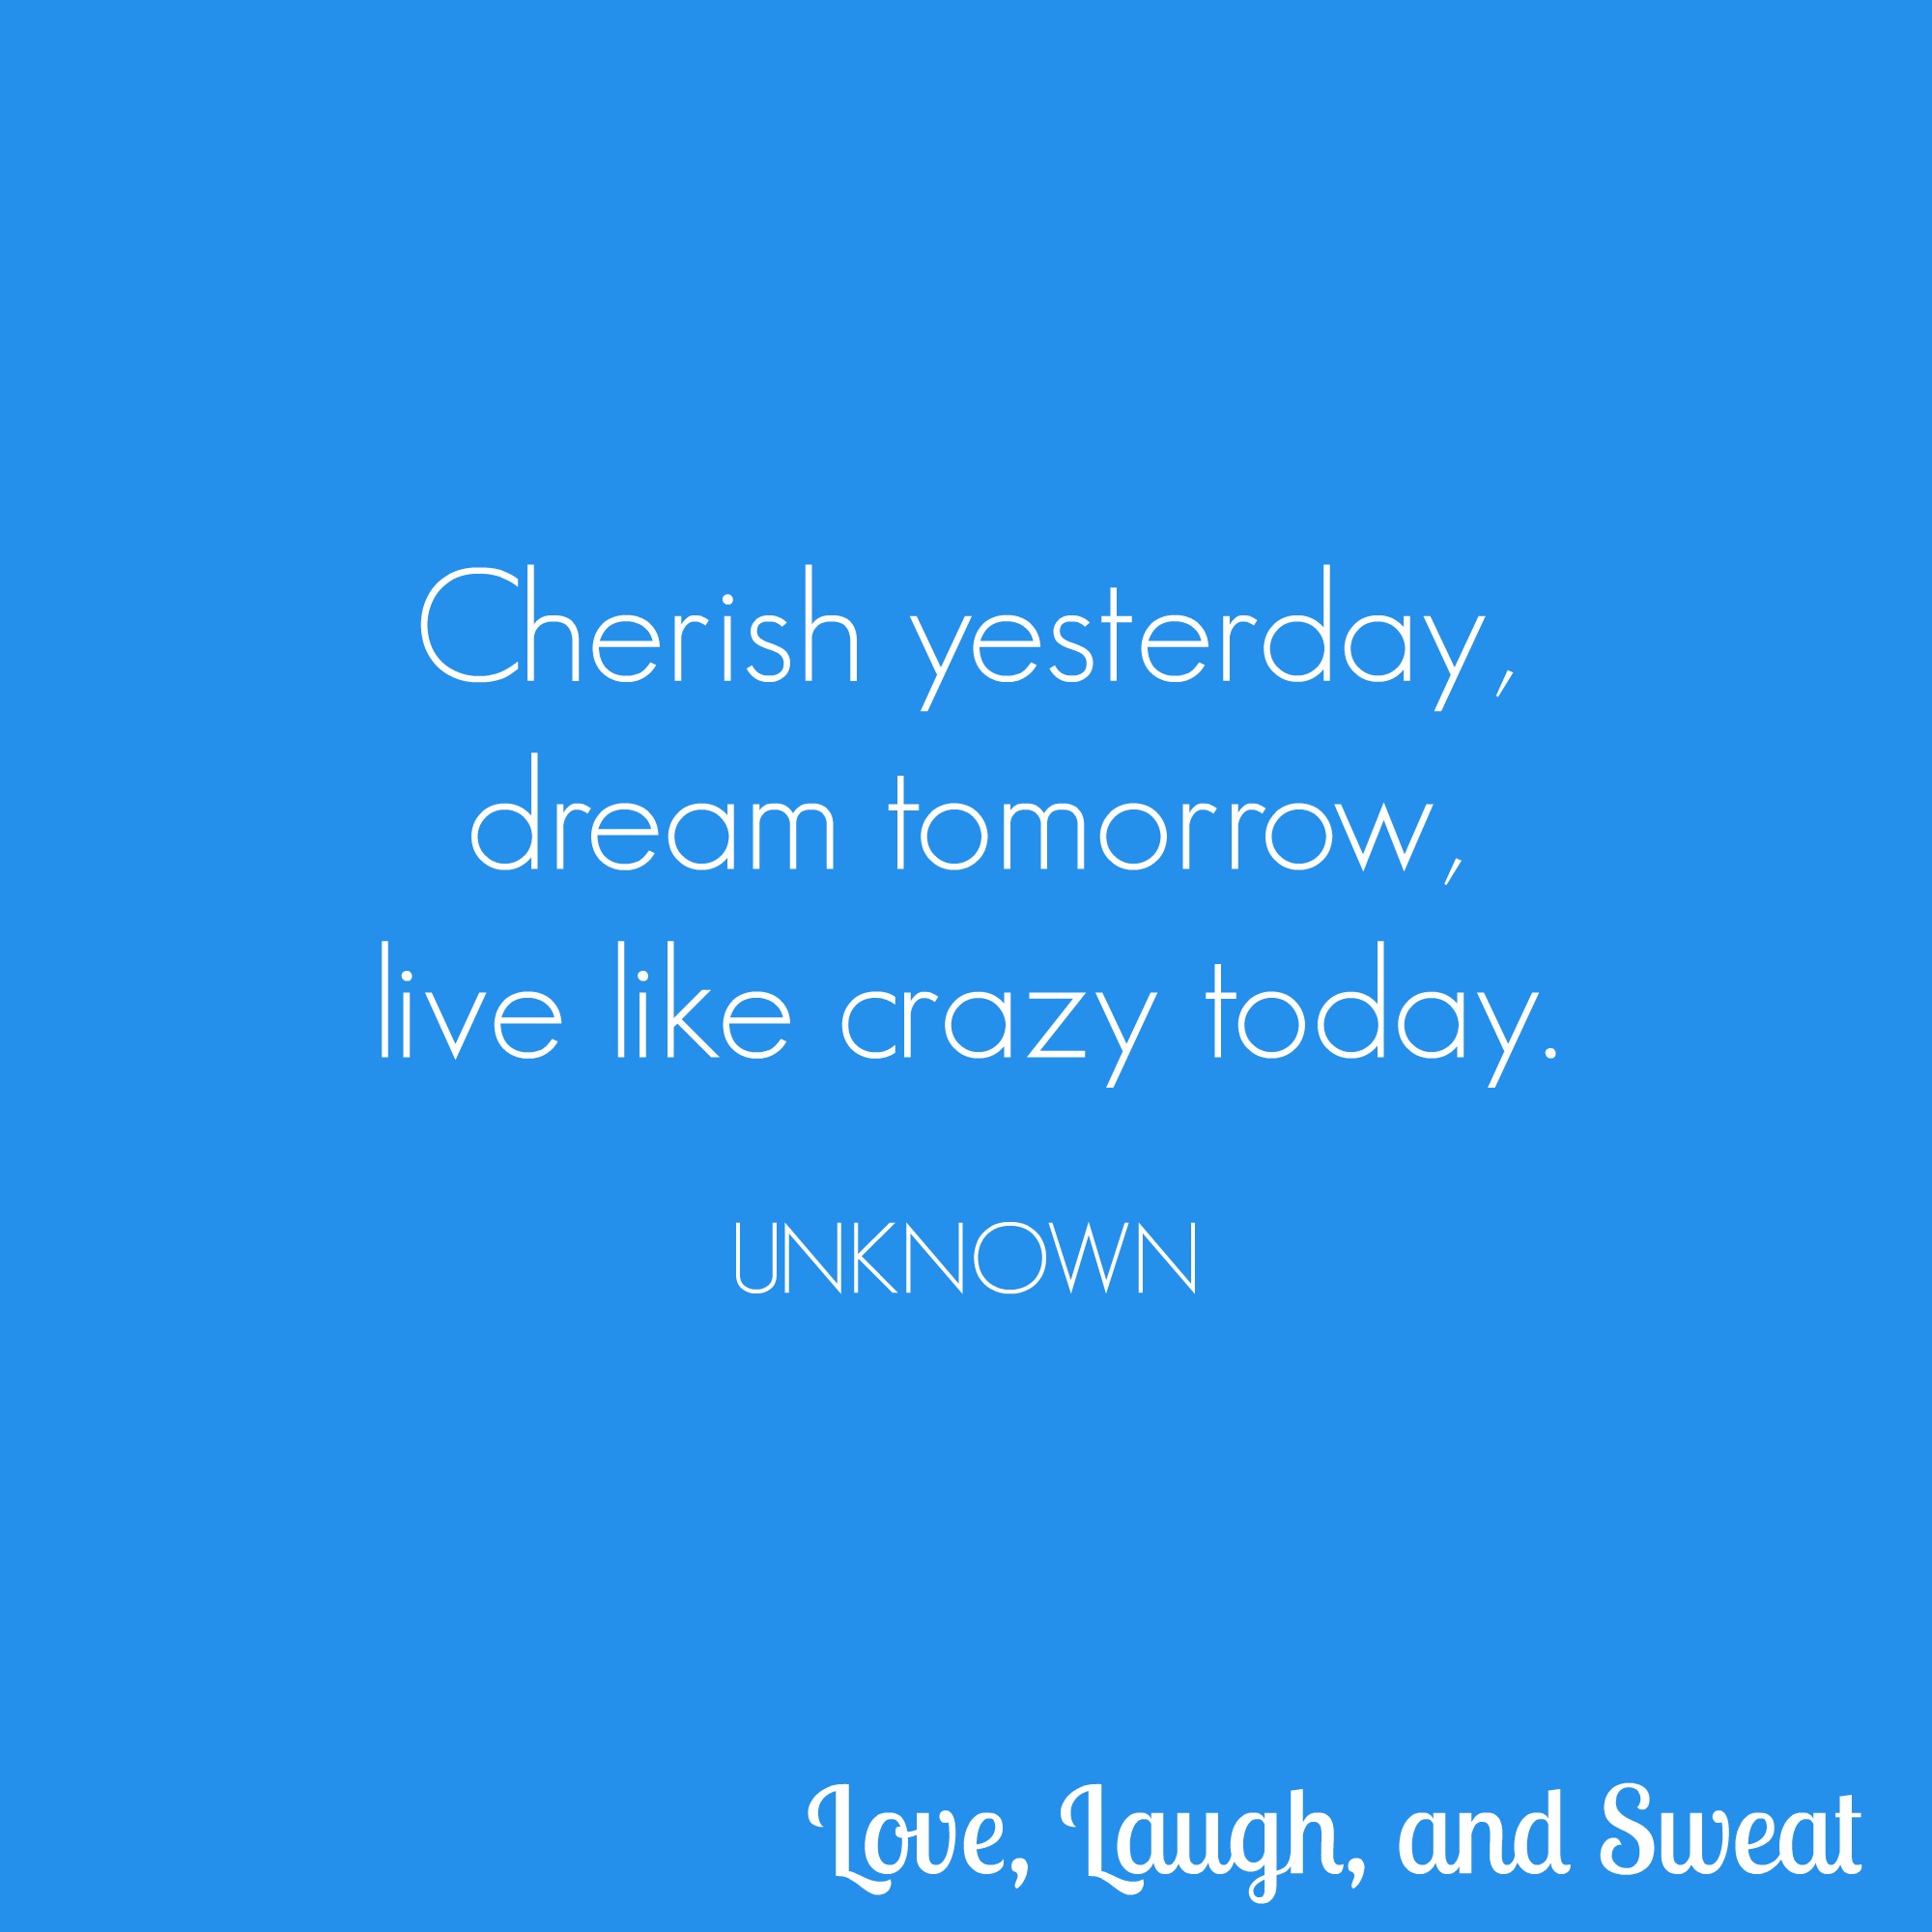 live like crazy